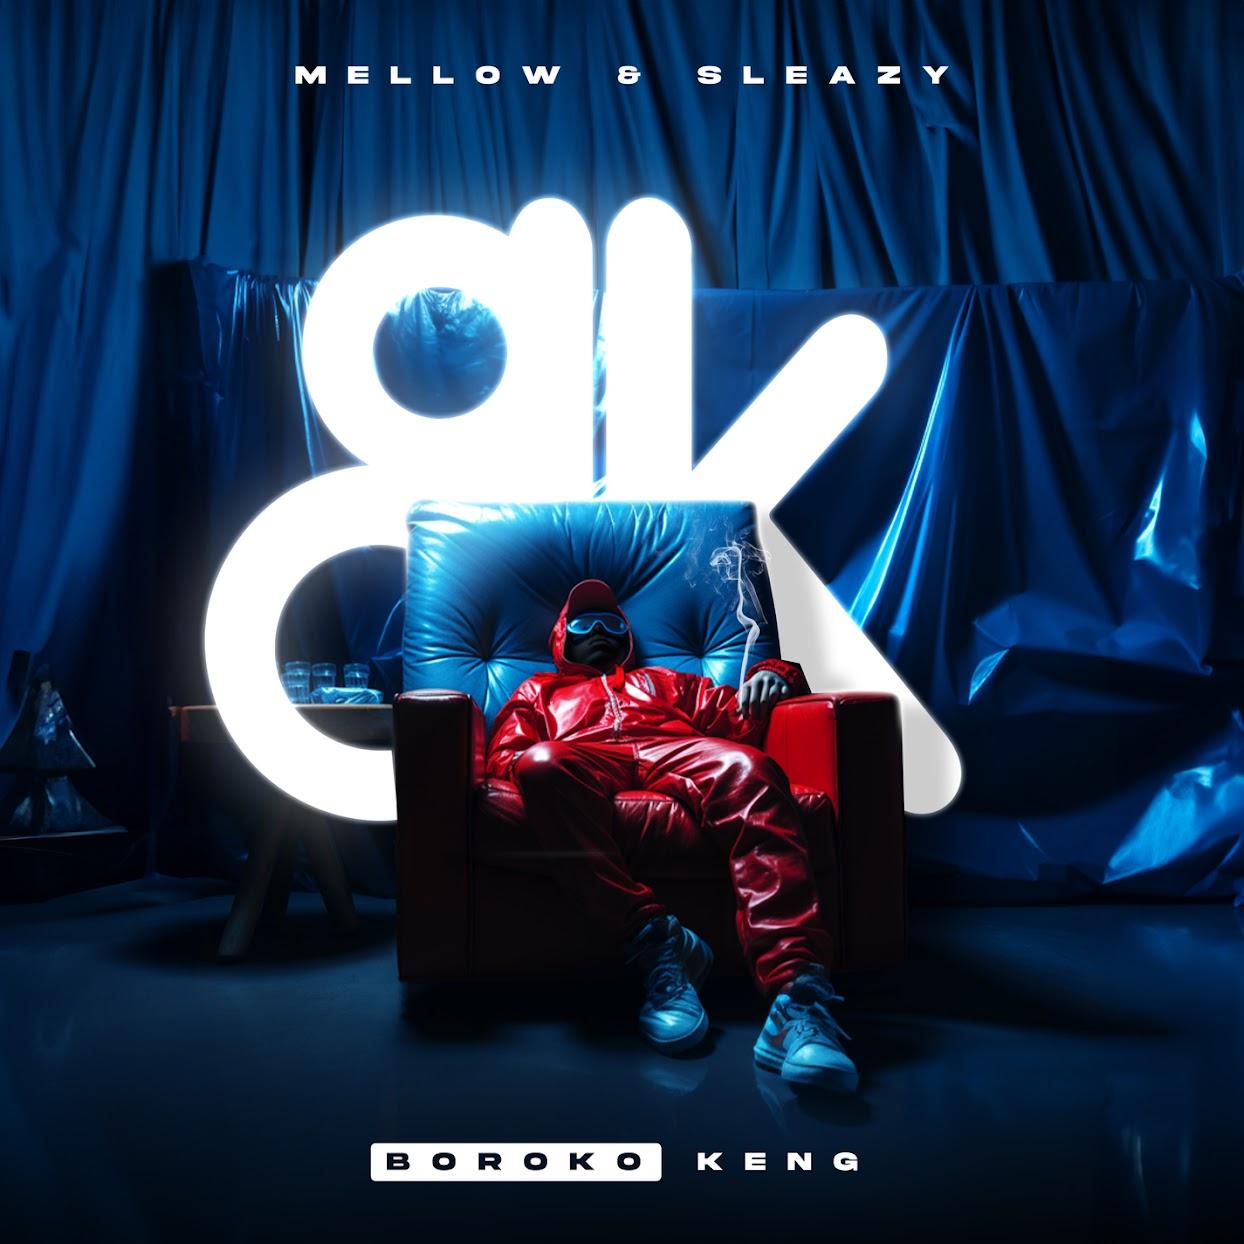 Mellow & Sleazy – Wang Compromisa (feat. Focalistic & Makhekhe Jr)